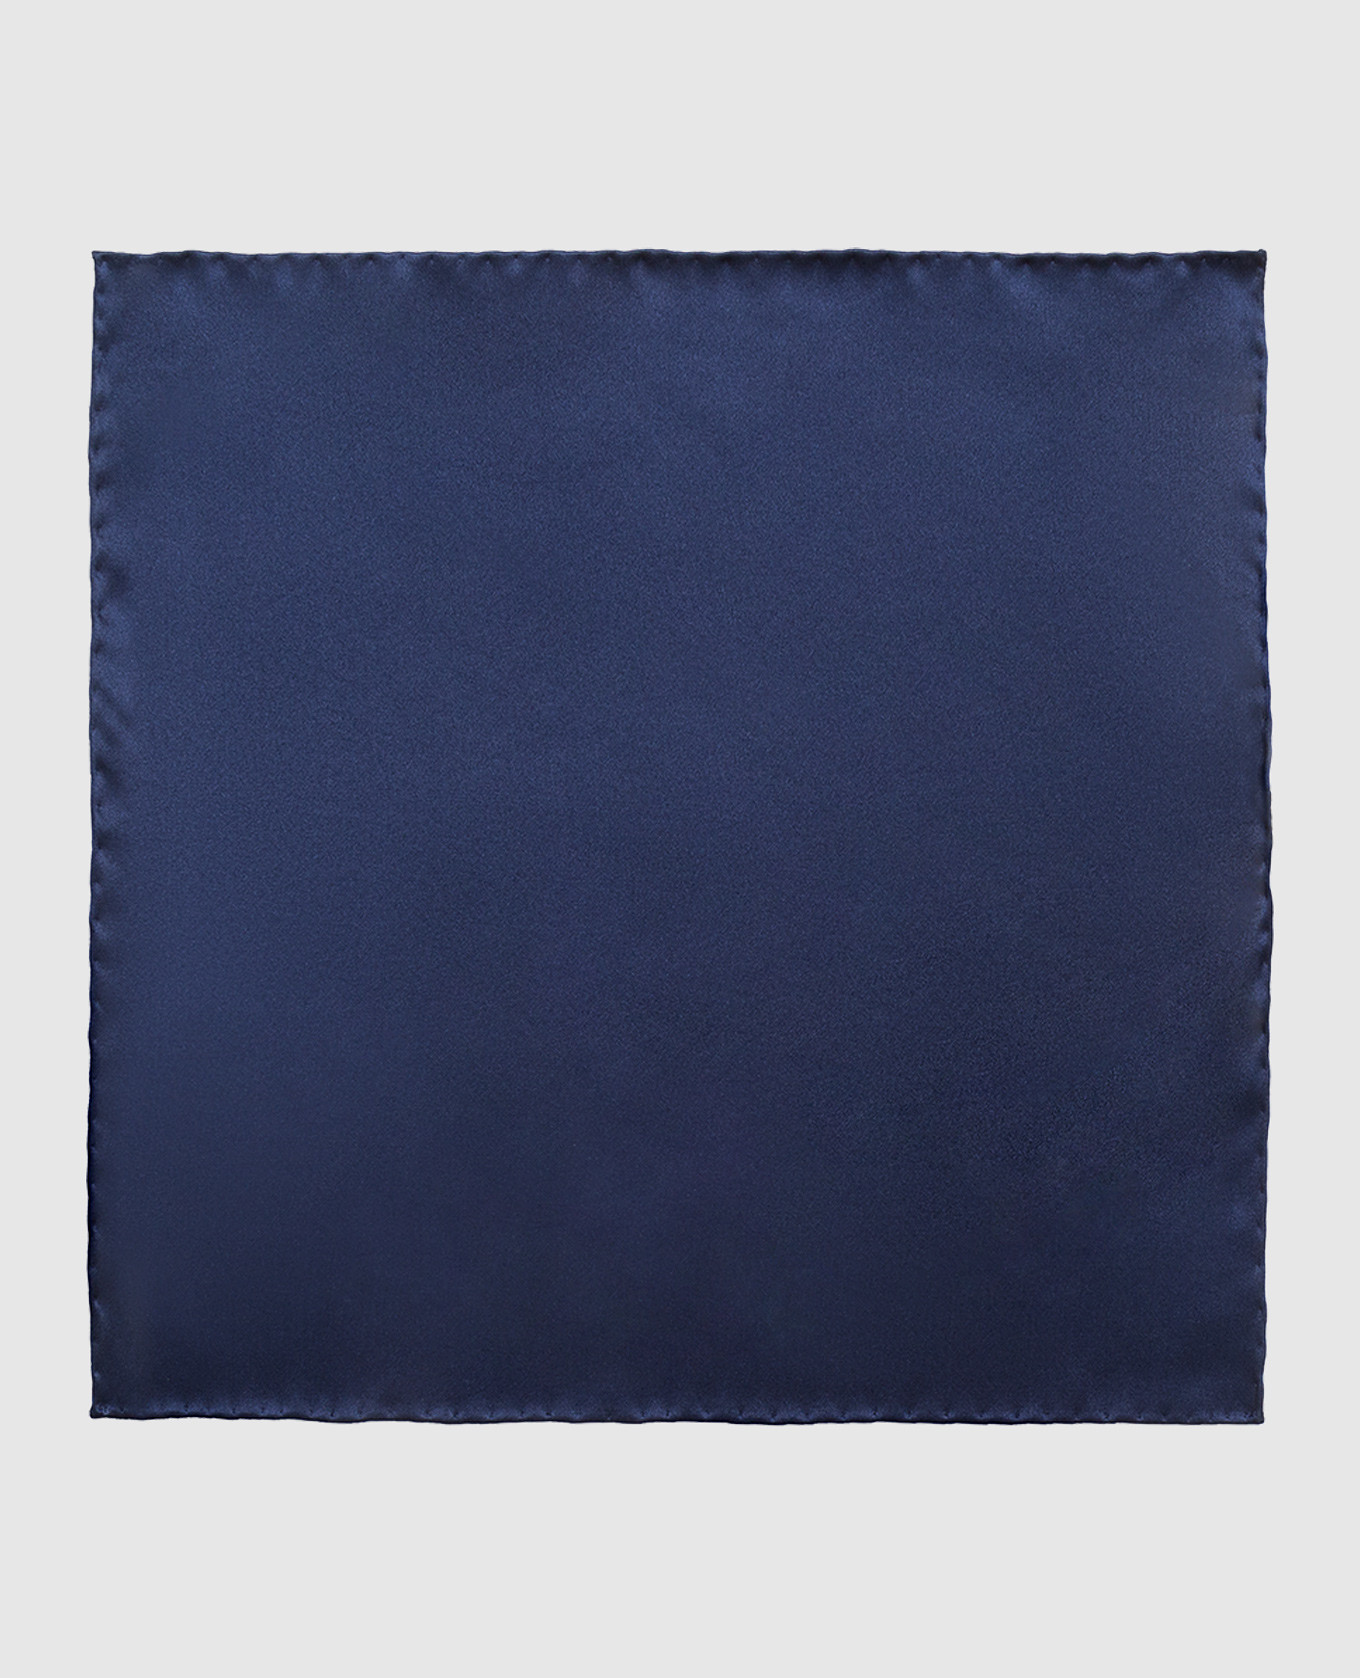 Children's blue pache scarf made of silk